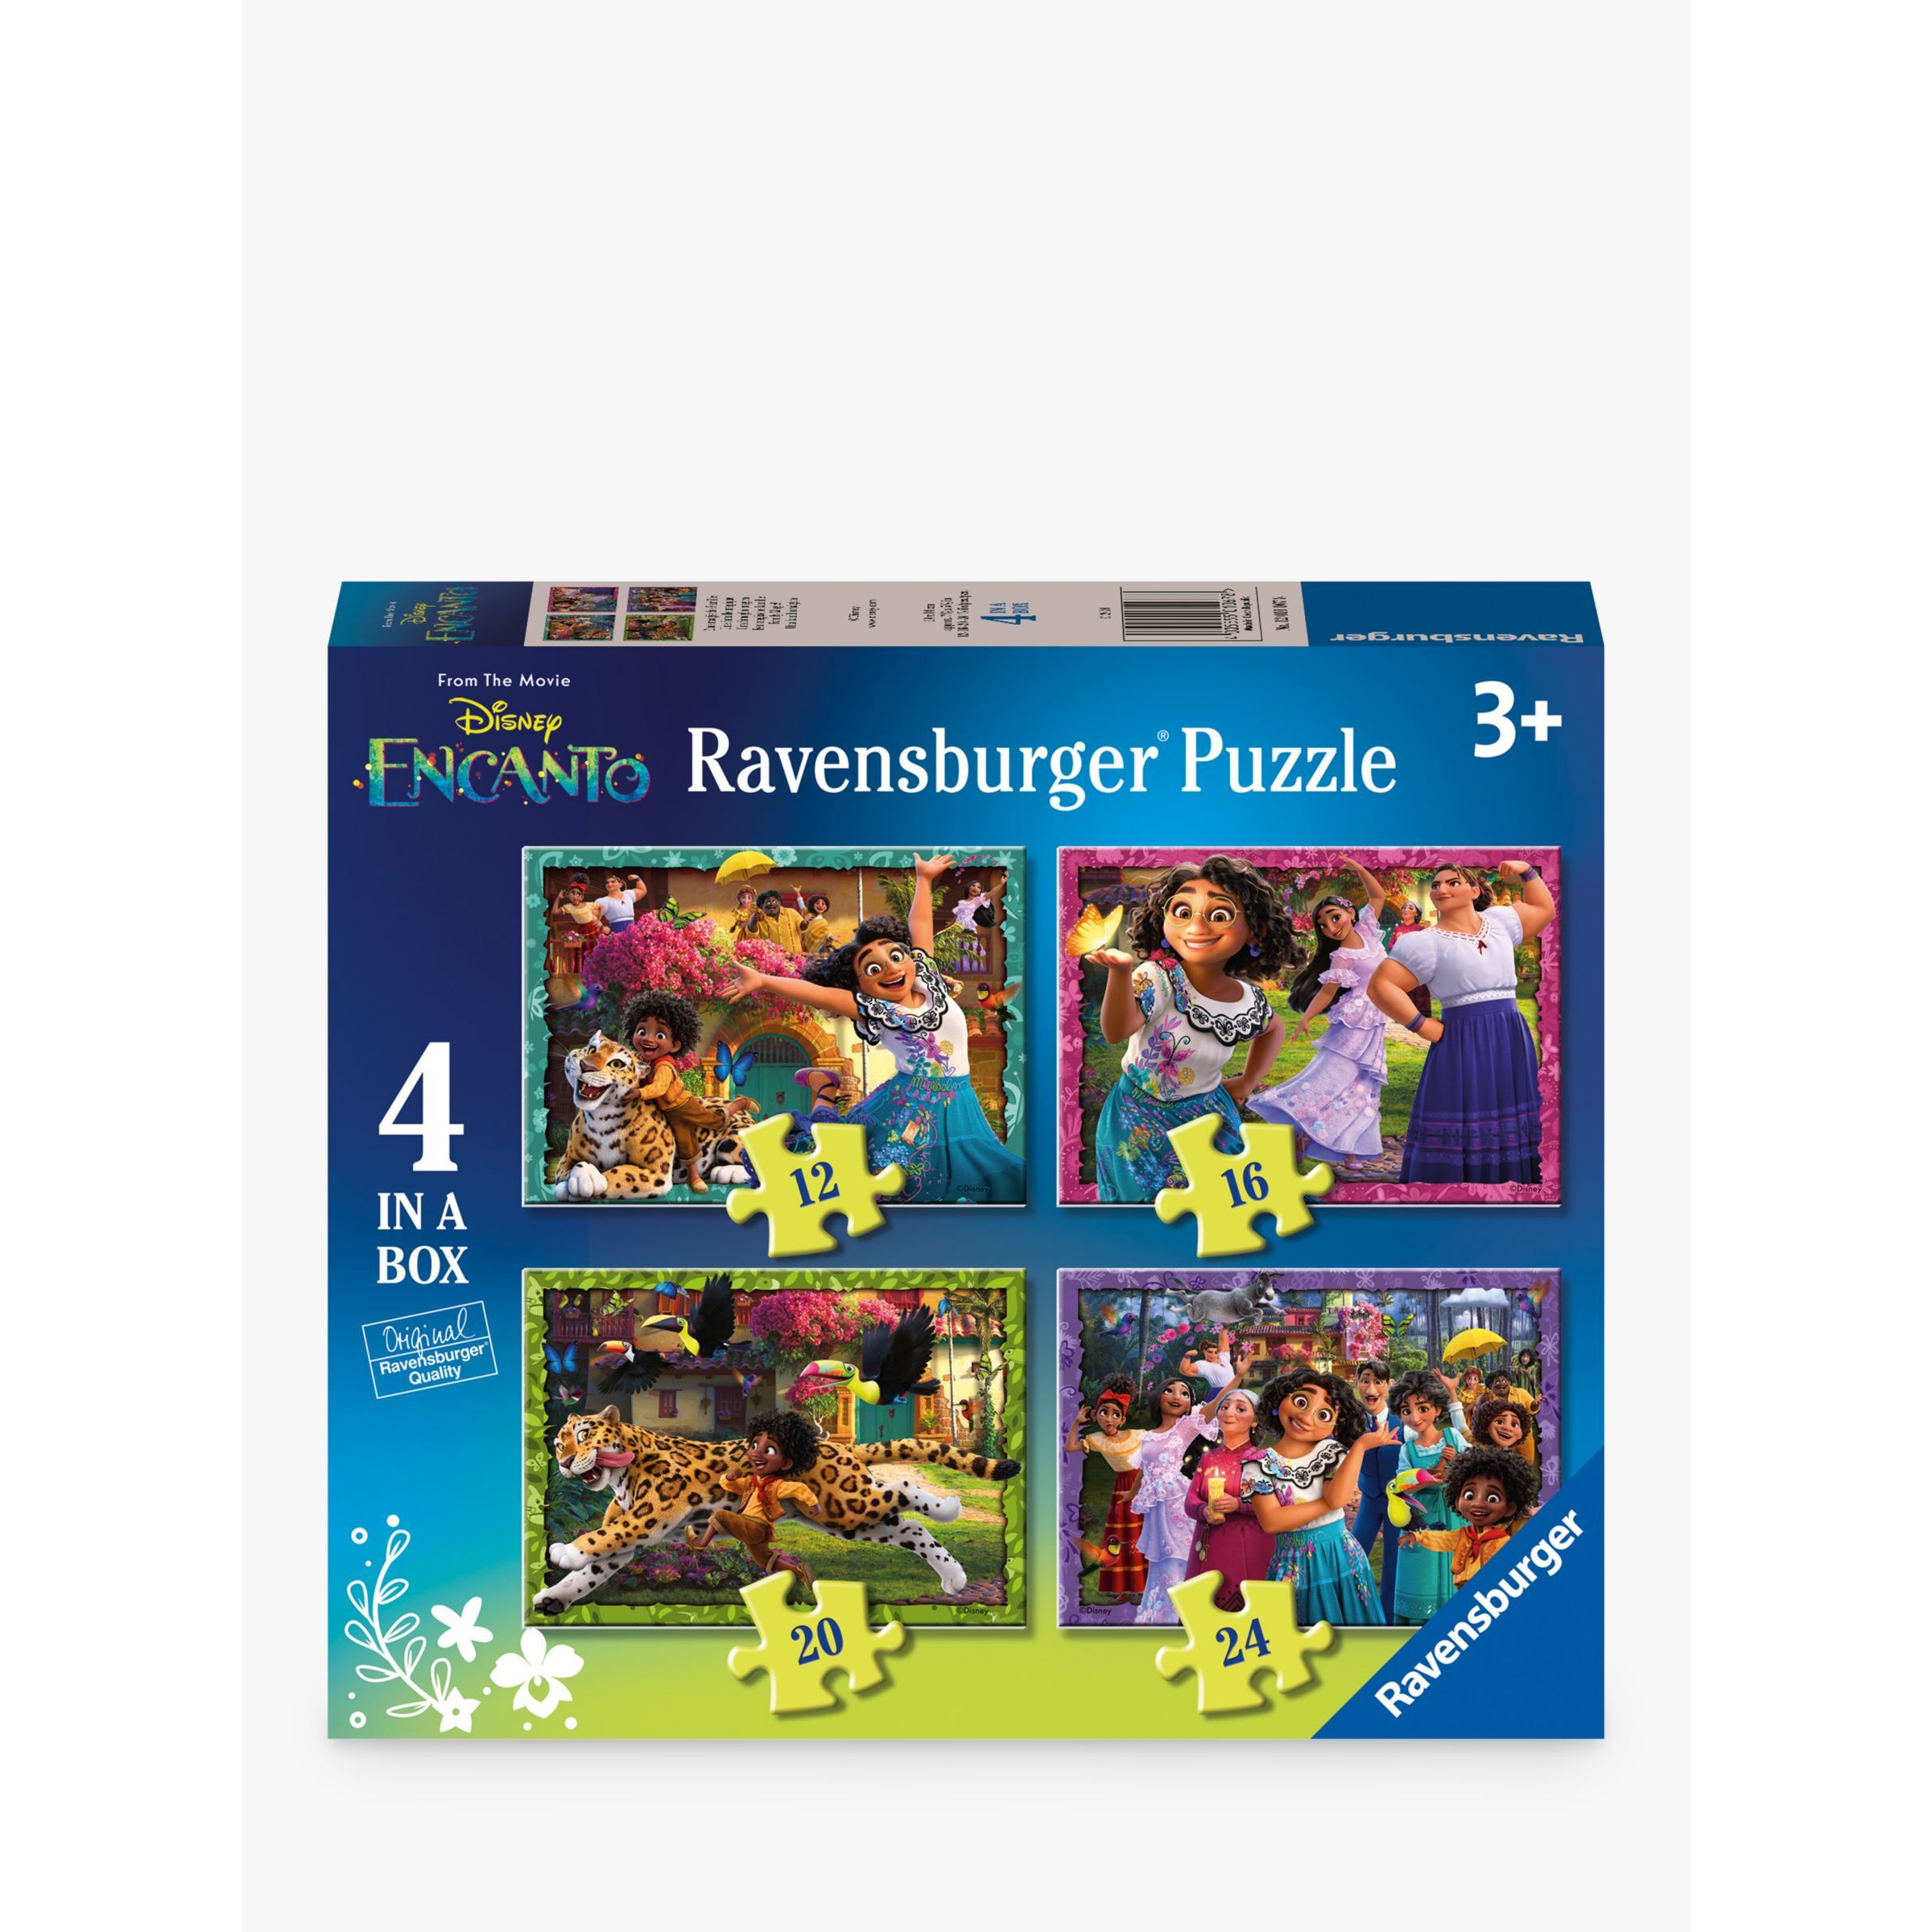 Ravensburger Disney Encanto 4-in-a-Box Jigsaw Puzzle - image 1